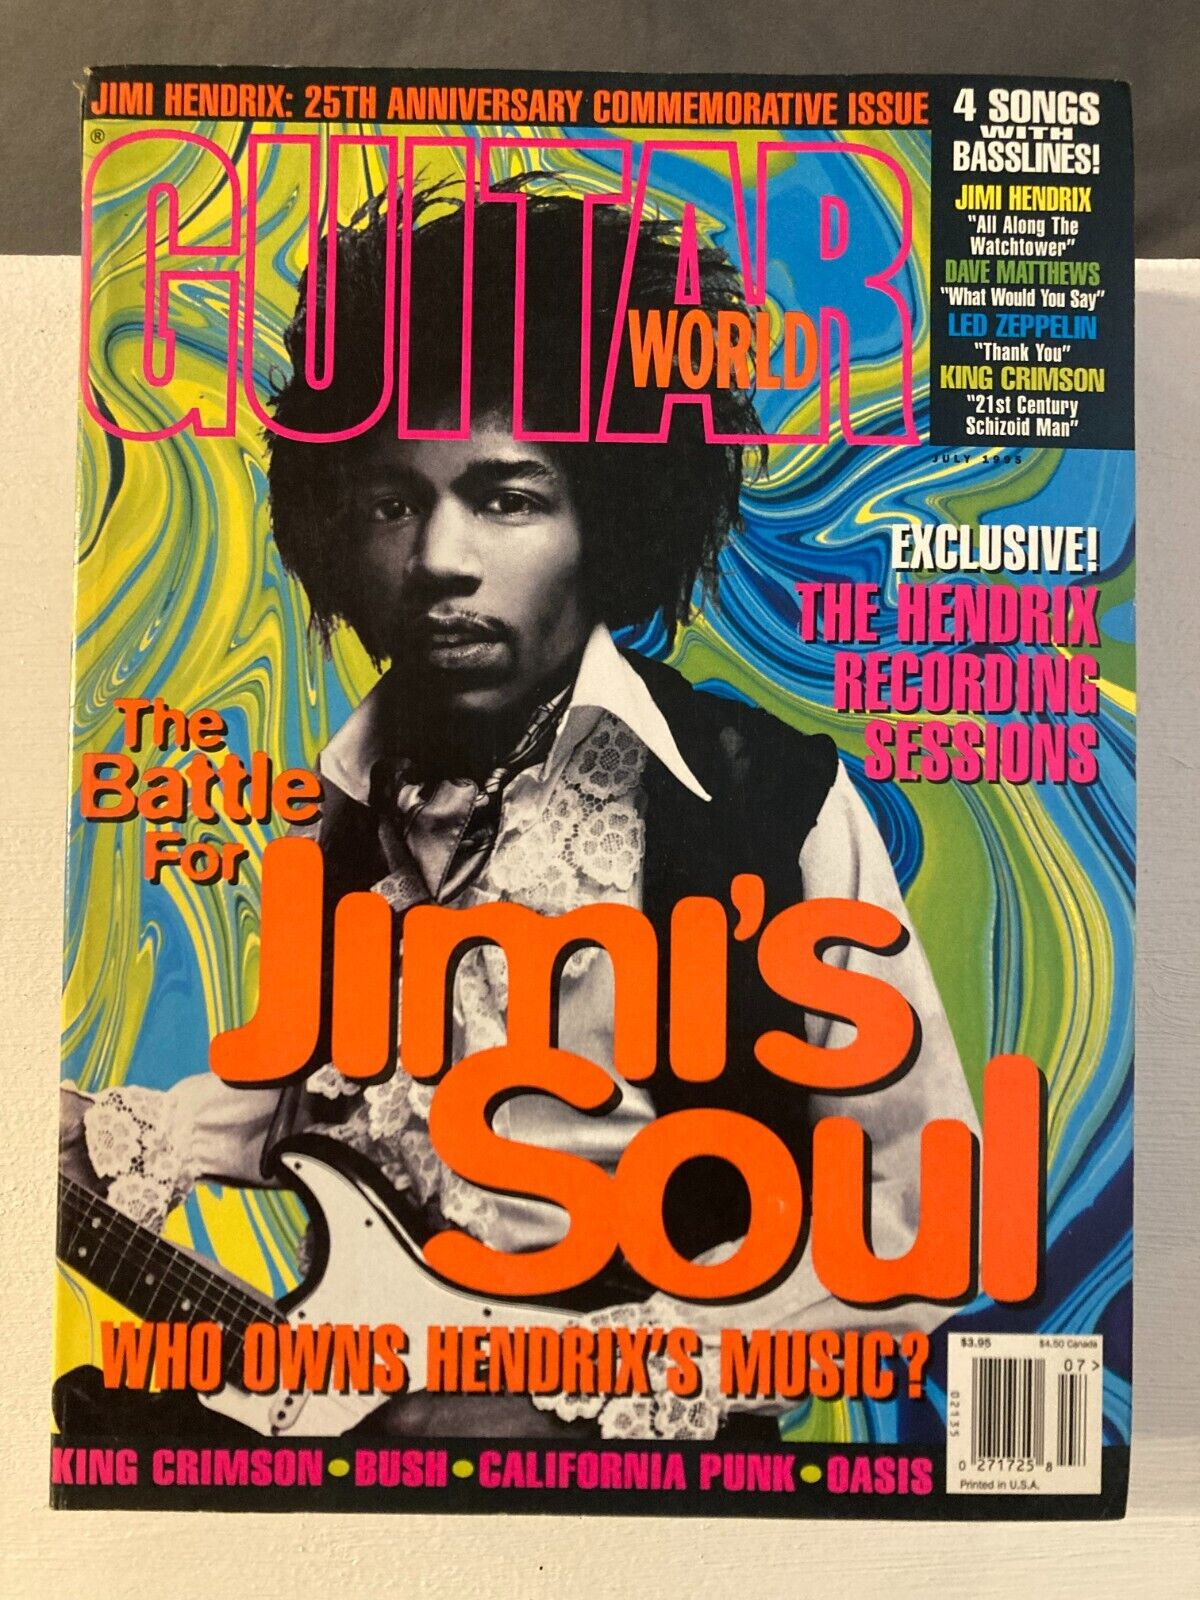 VTG JULY 1995 GUITAR WORLD vintage music magazine JIMI HENDRIX